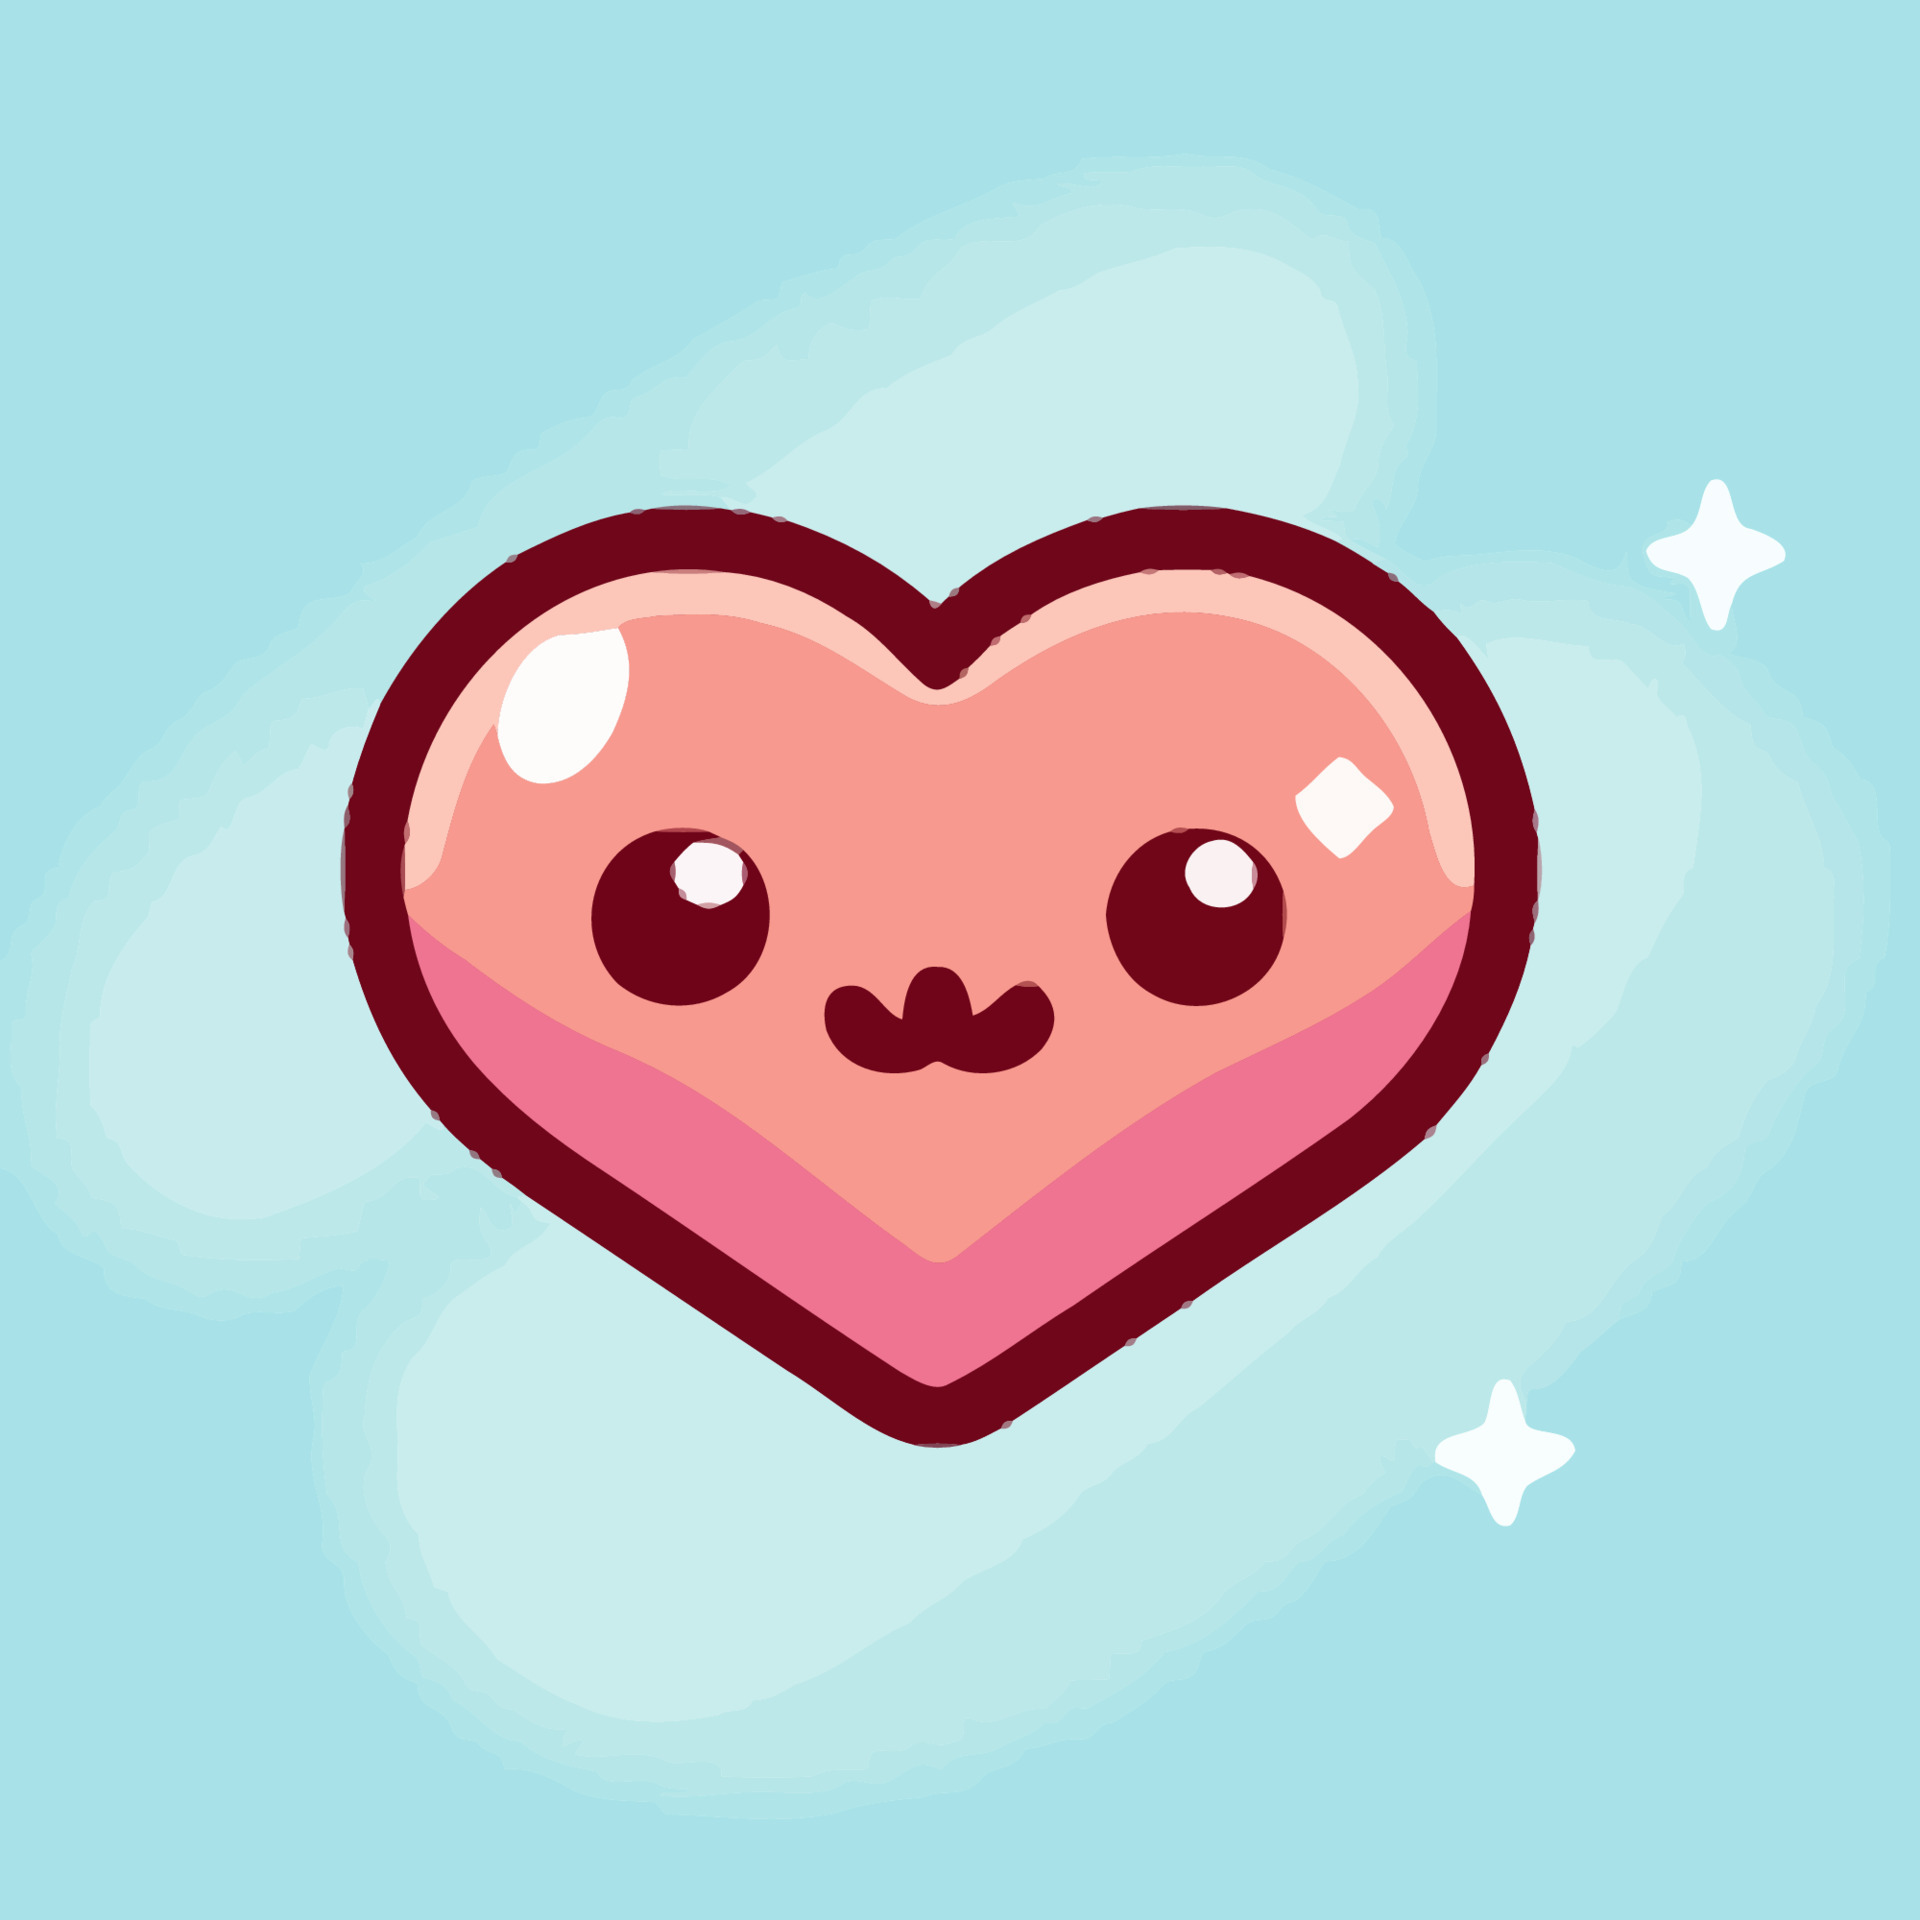 Valentines day Cute Heart illustration Heart kawaii chibi vector drawing style Heart cartoon Valentine's day 17048260 Vector Art at Vecteezy